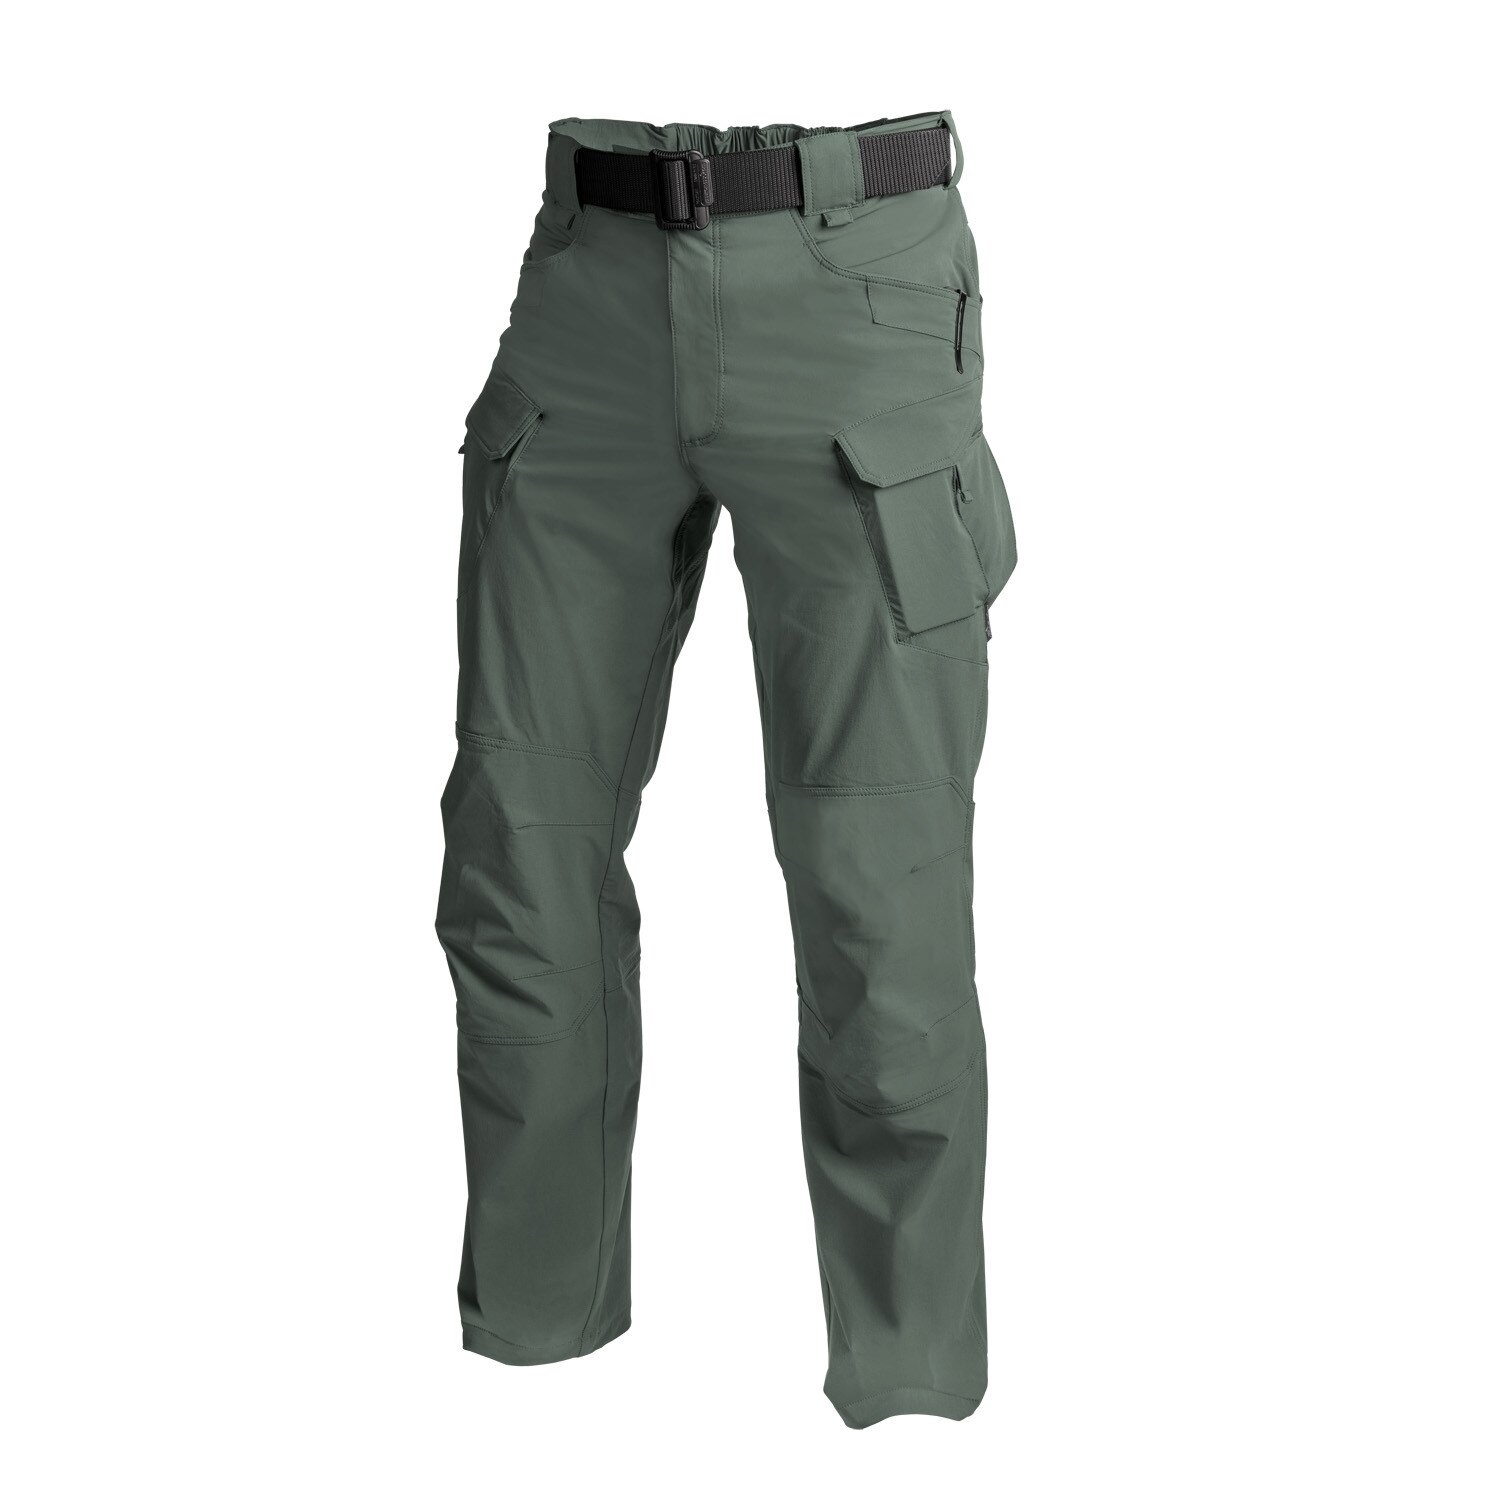 Softshellové kalhoty Helikon-Tex® OTP® VersaStretch® - olivově zelené (Barva: Olive Drab, Velikost: M)